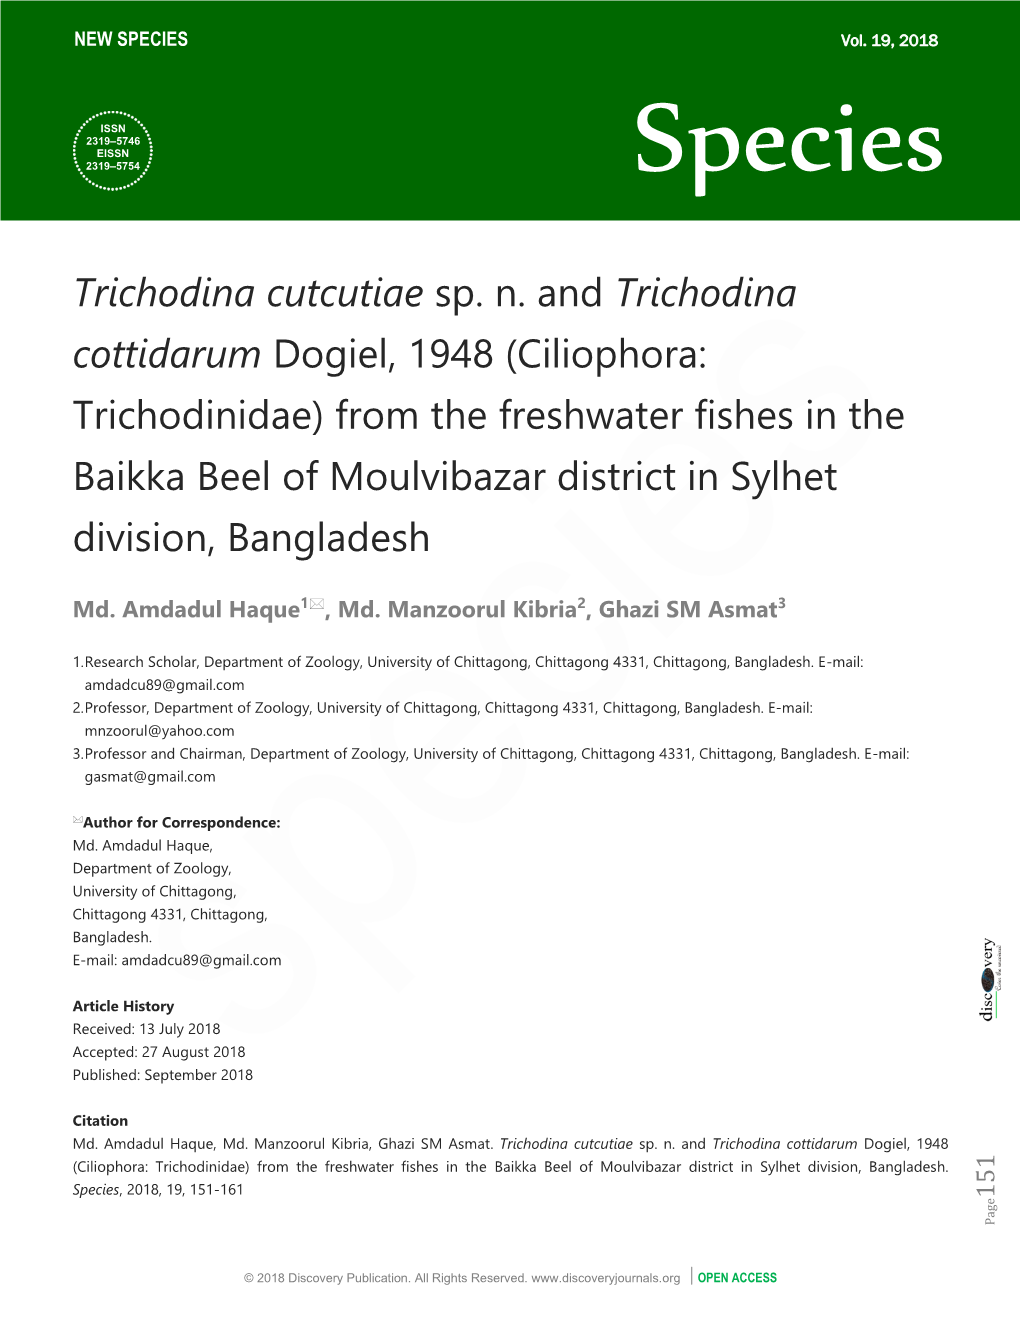 Trichodina Cutcutiae Sp. N. and Trichodina Cottidarum Dogiel, 1948 (Ciliophora: Trichodinidae) from the Freshwater Fishes In